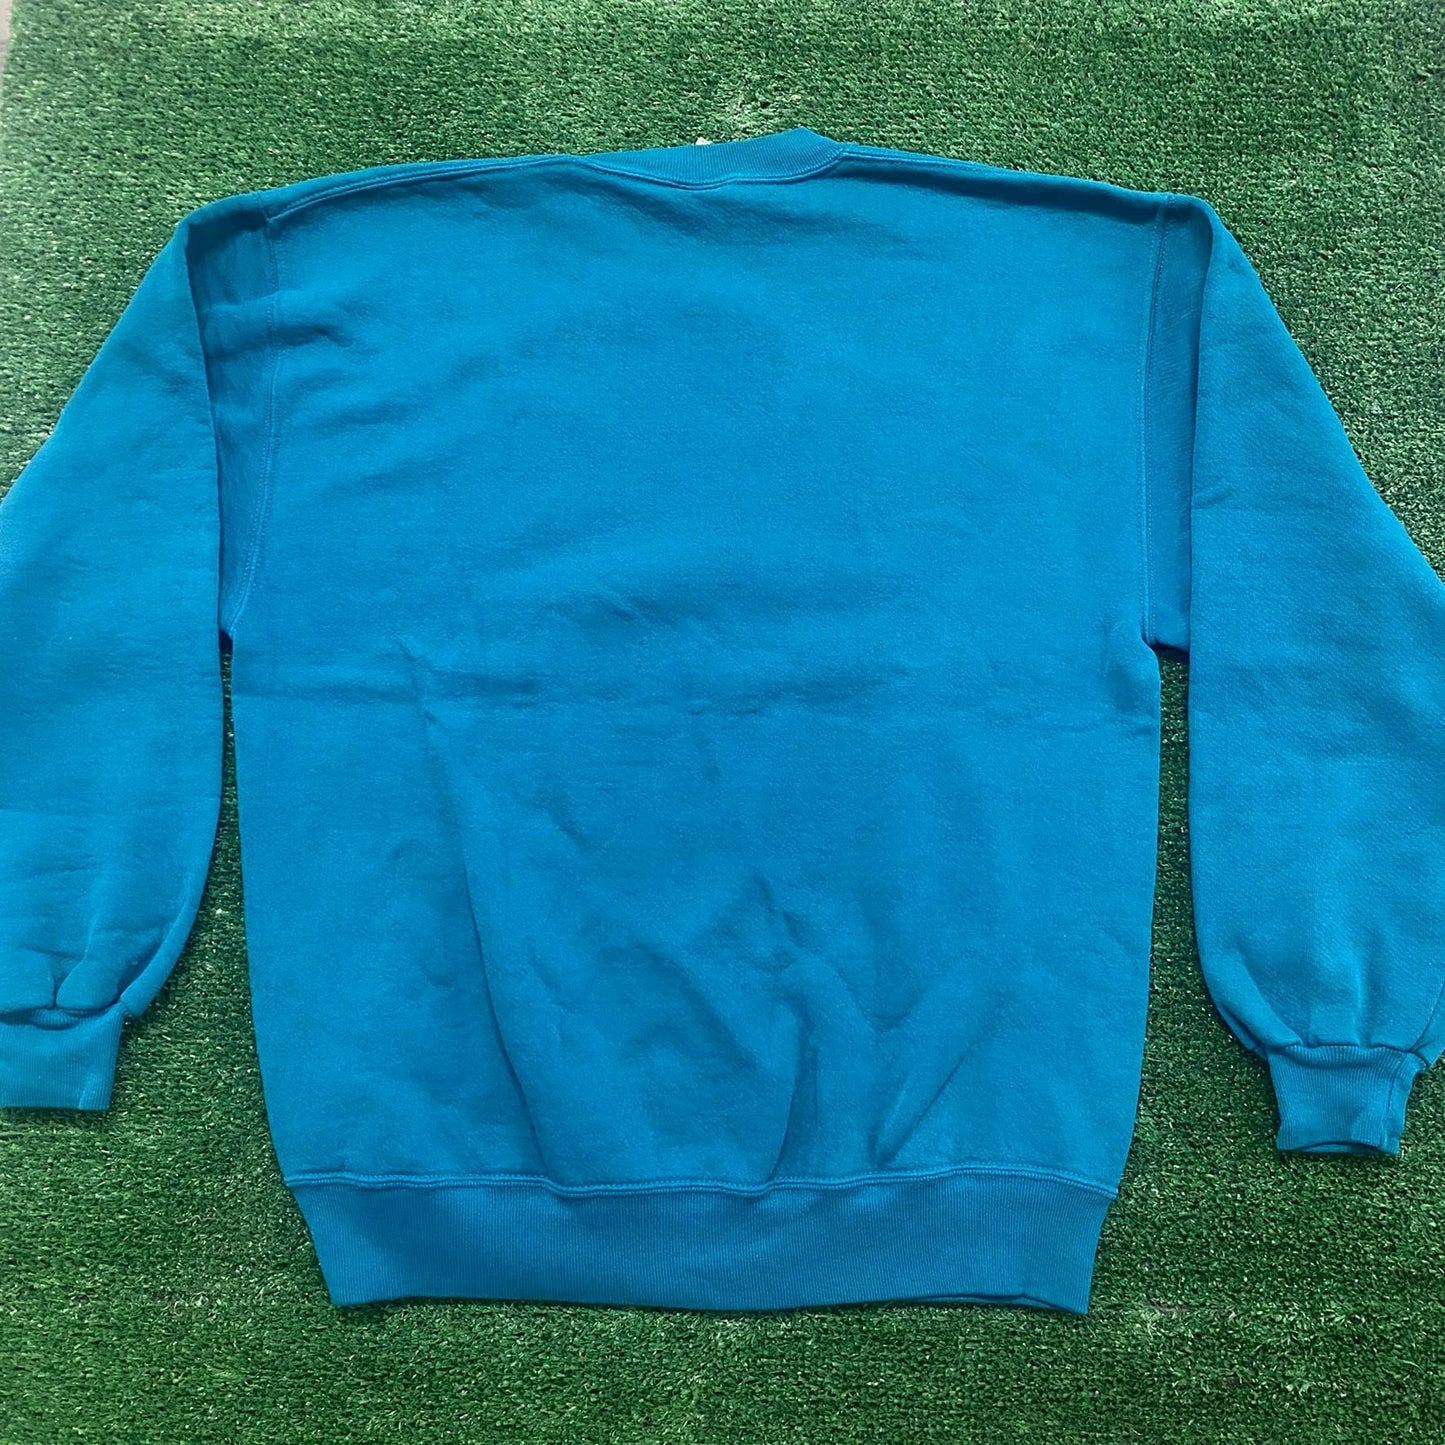 Russell Athletic Vintage 90s Crewneck Sweatshirt